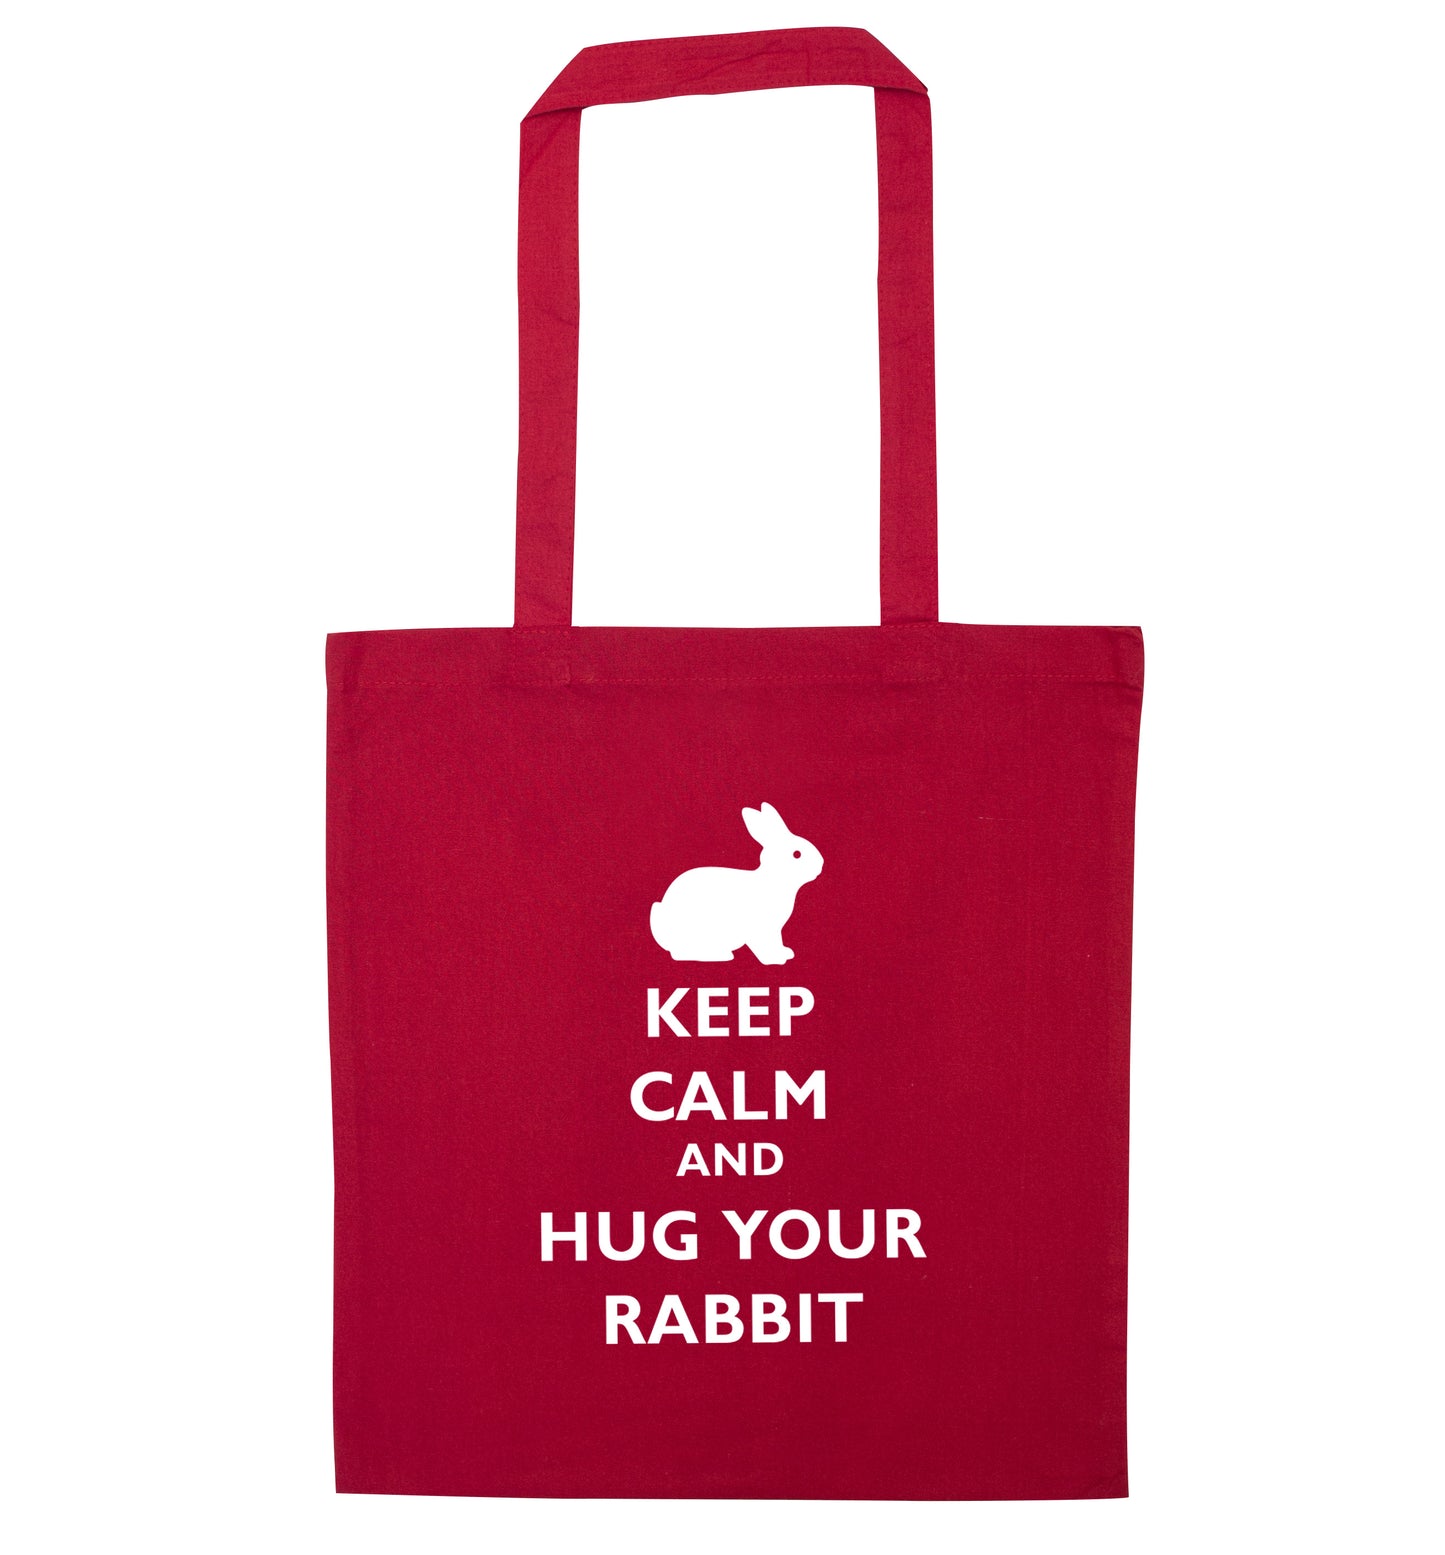 Keep calm and hug your rabbit red tote bag